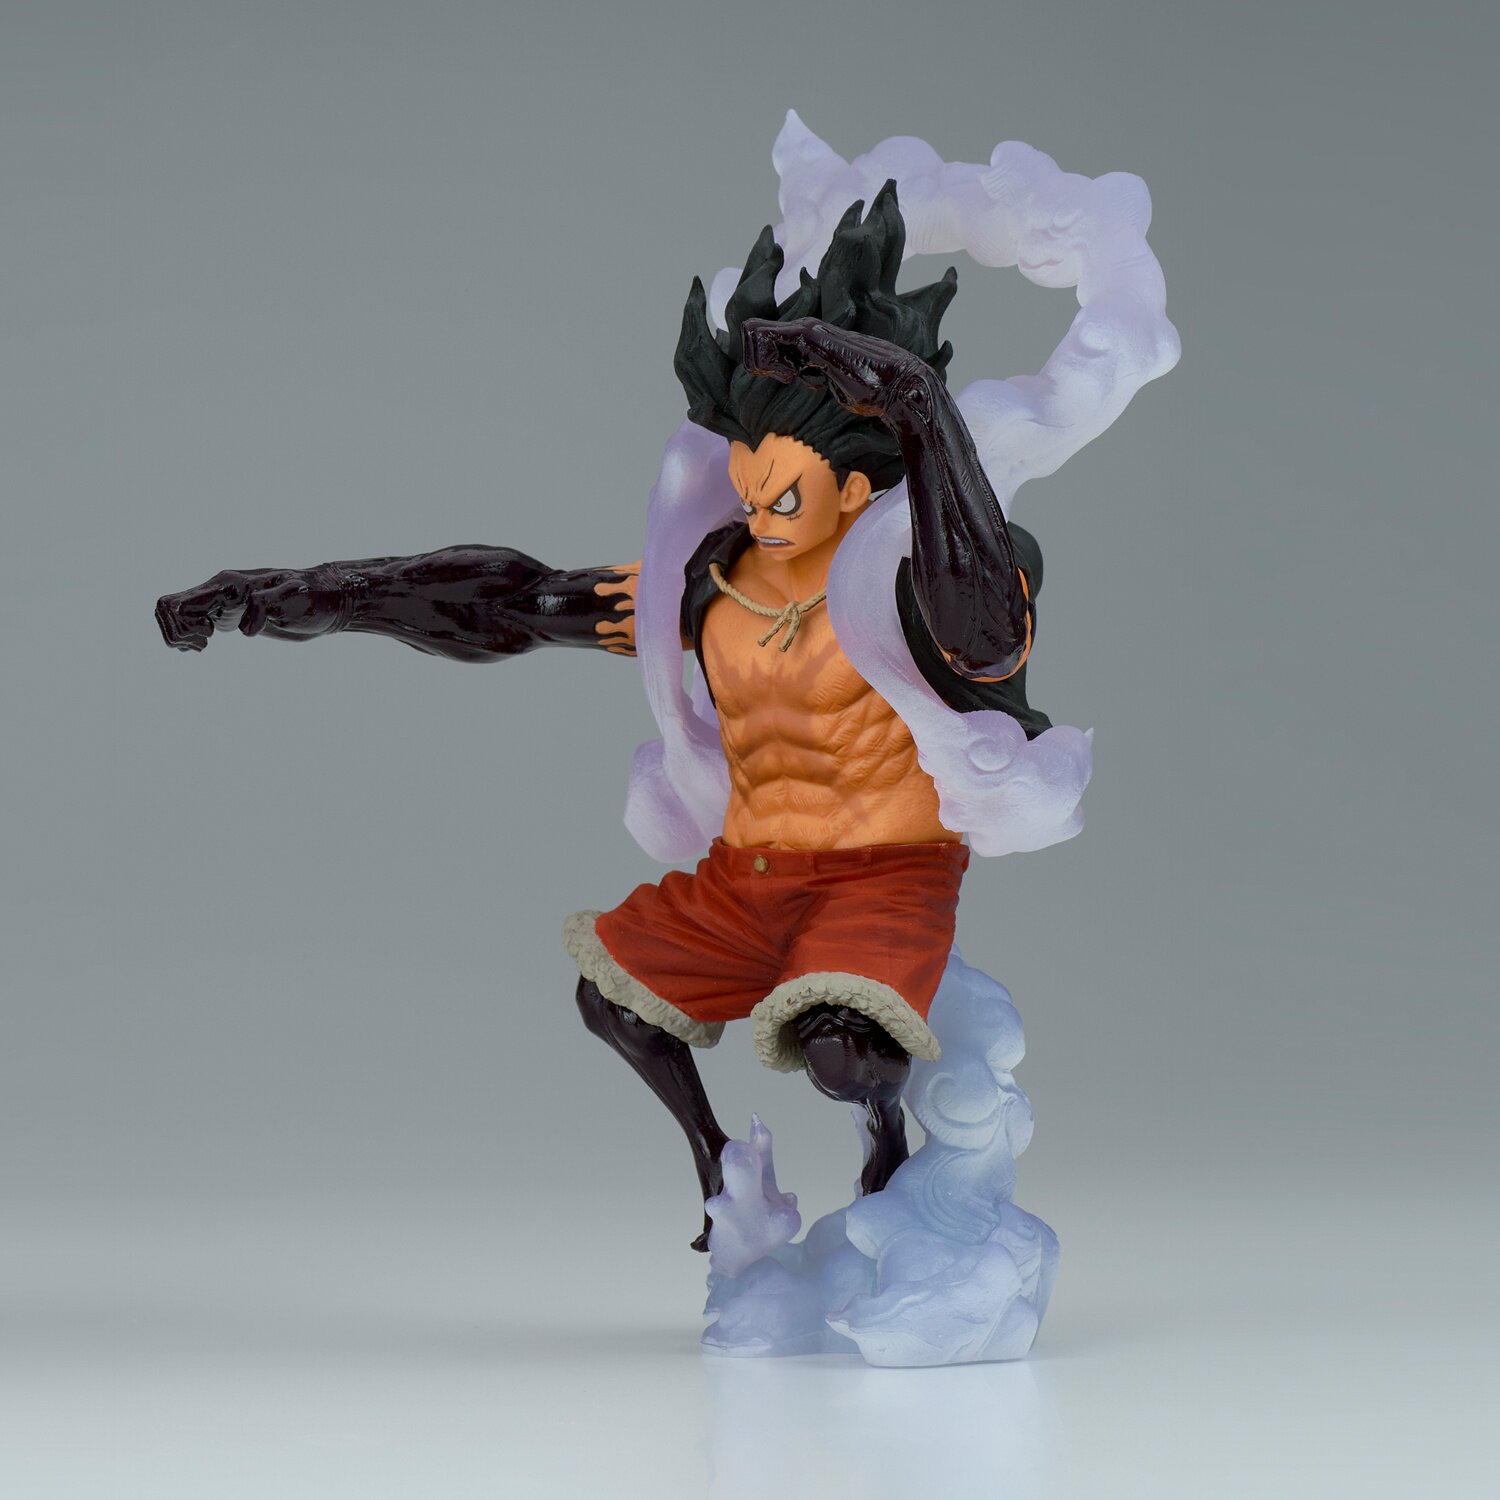 Roronoa Zoro (One Piece) Dioramatic Ver B. The Anime Statue